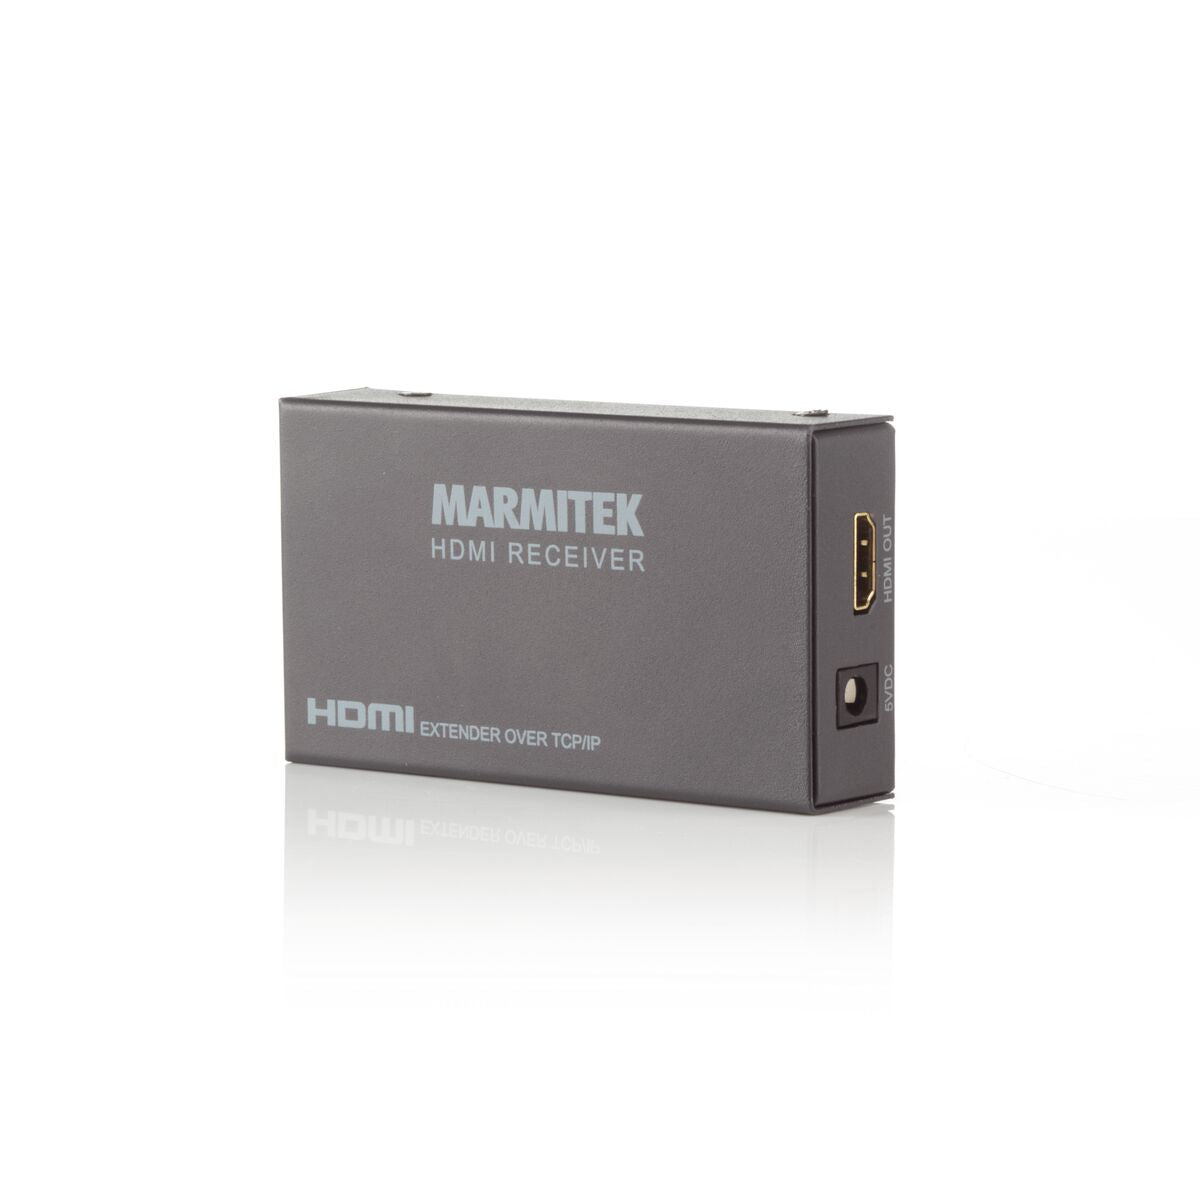 MegaView 90 - HDMI Extender Ethernet - Side View HDMI Receiver | Marmitek